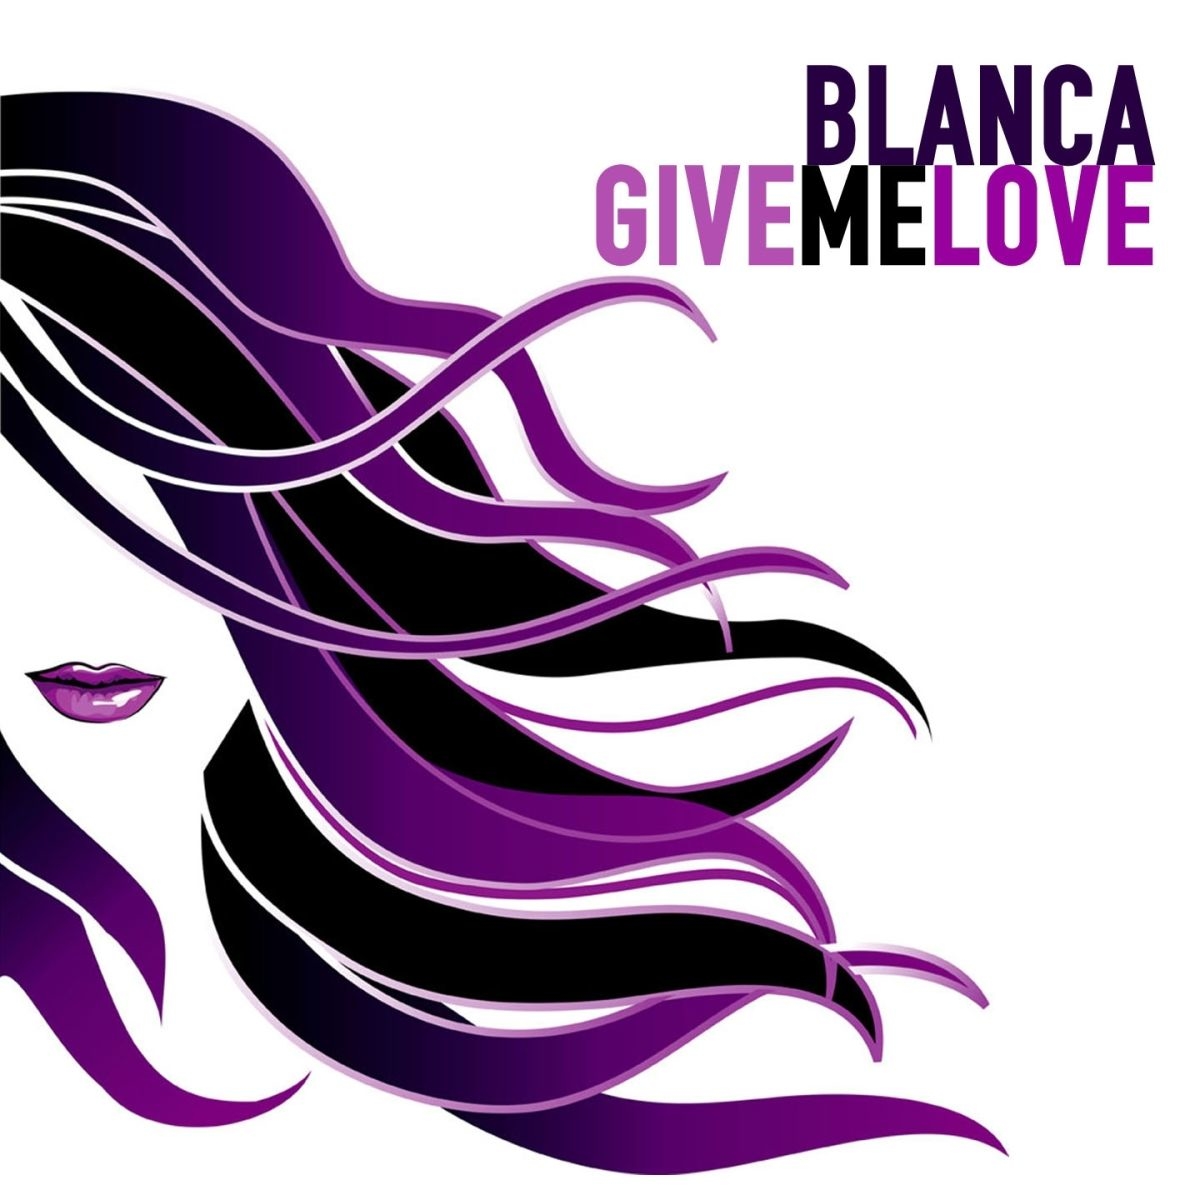 Blanca - Give Me Love (Web Single) (1995) FLAC